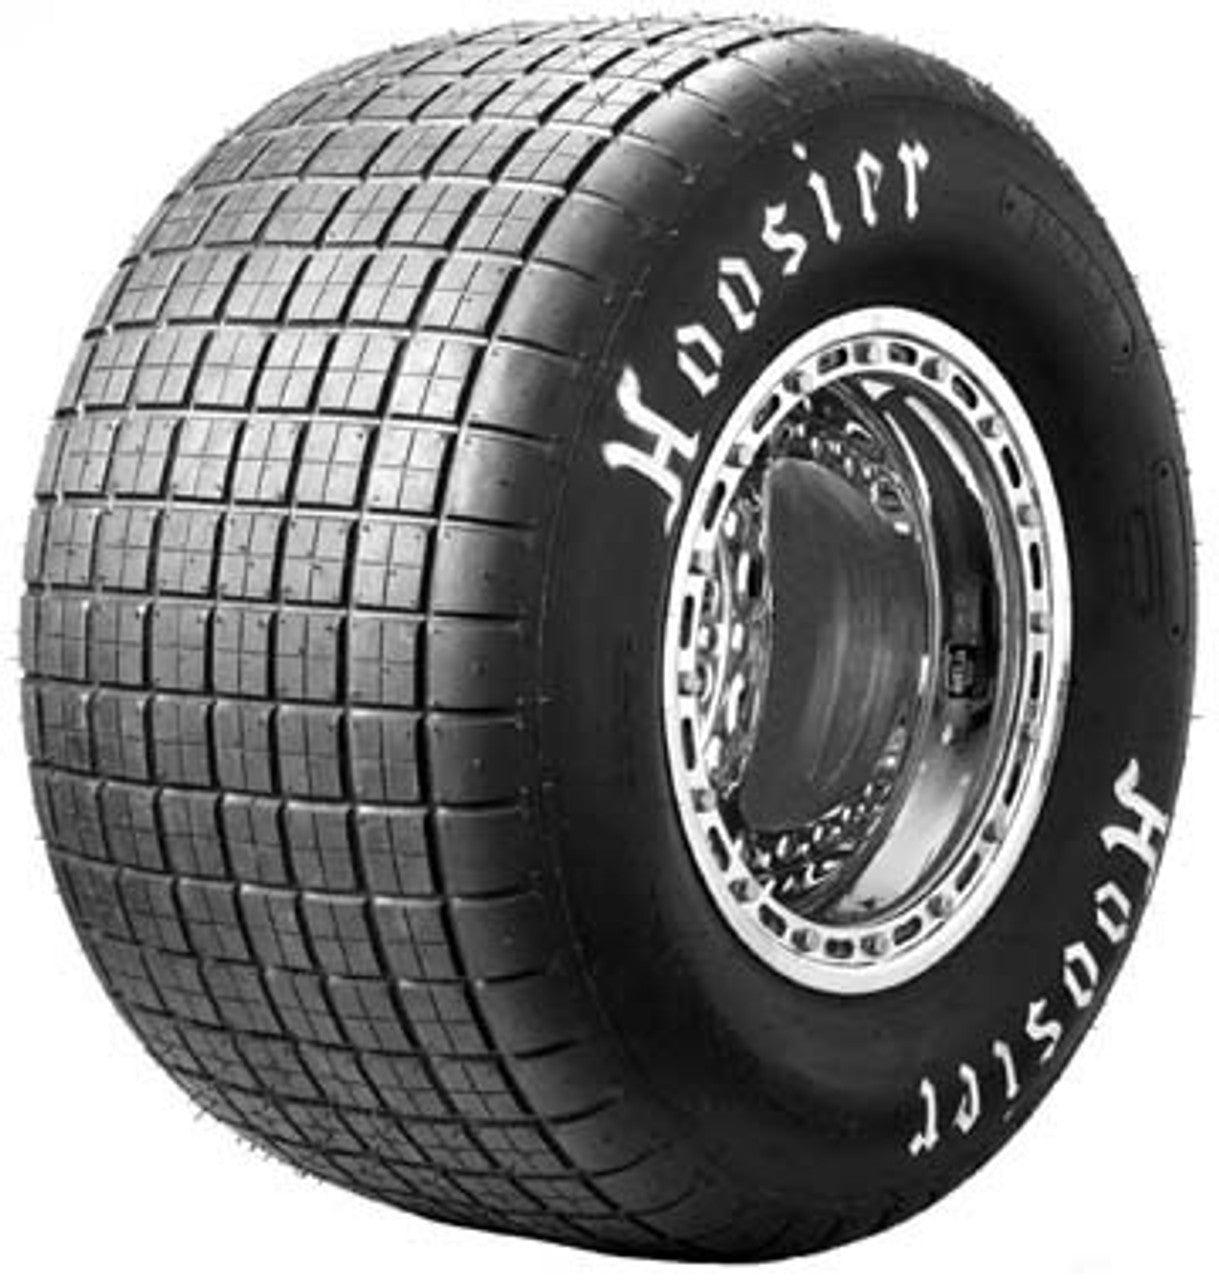 LM Dirt Tire LCB NLMT2.25 92.0/11.0-15 - Burlile Performance Products